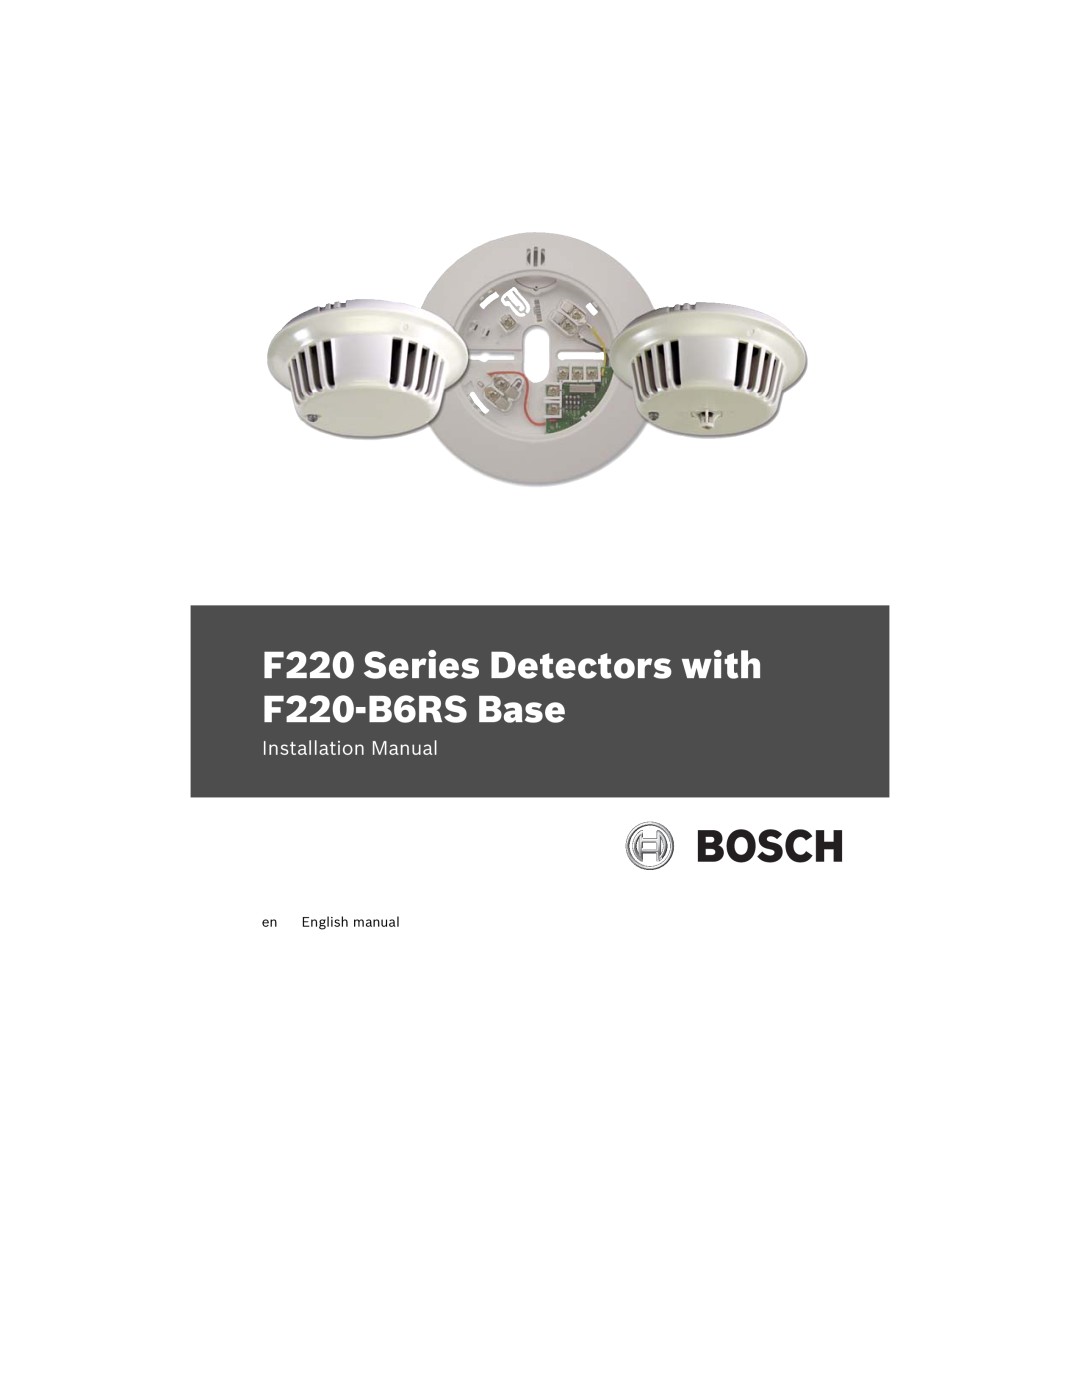 Bosch Appliances installation manual F220 Series Detectors with F220-B6RSBase, Installation Manual, English manual 